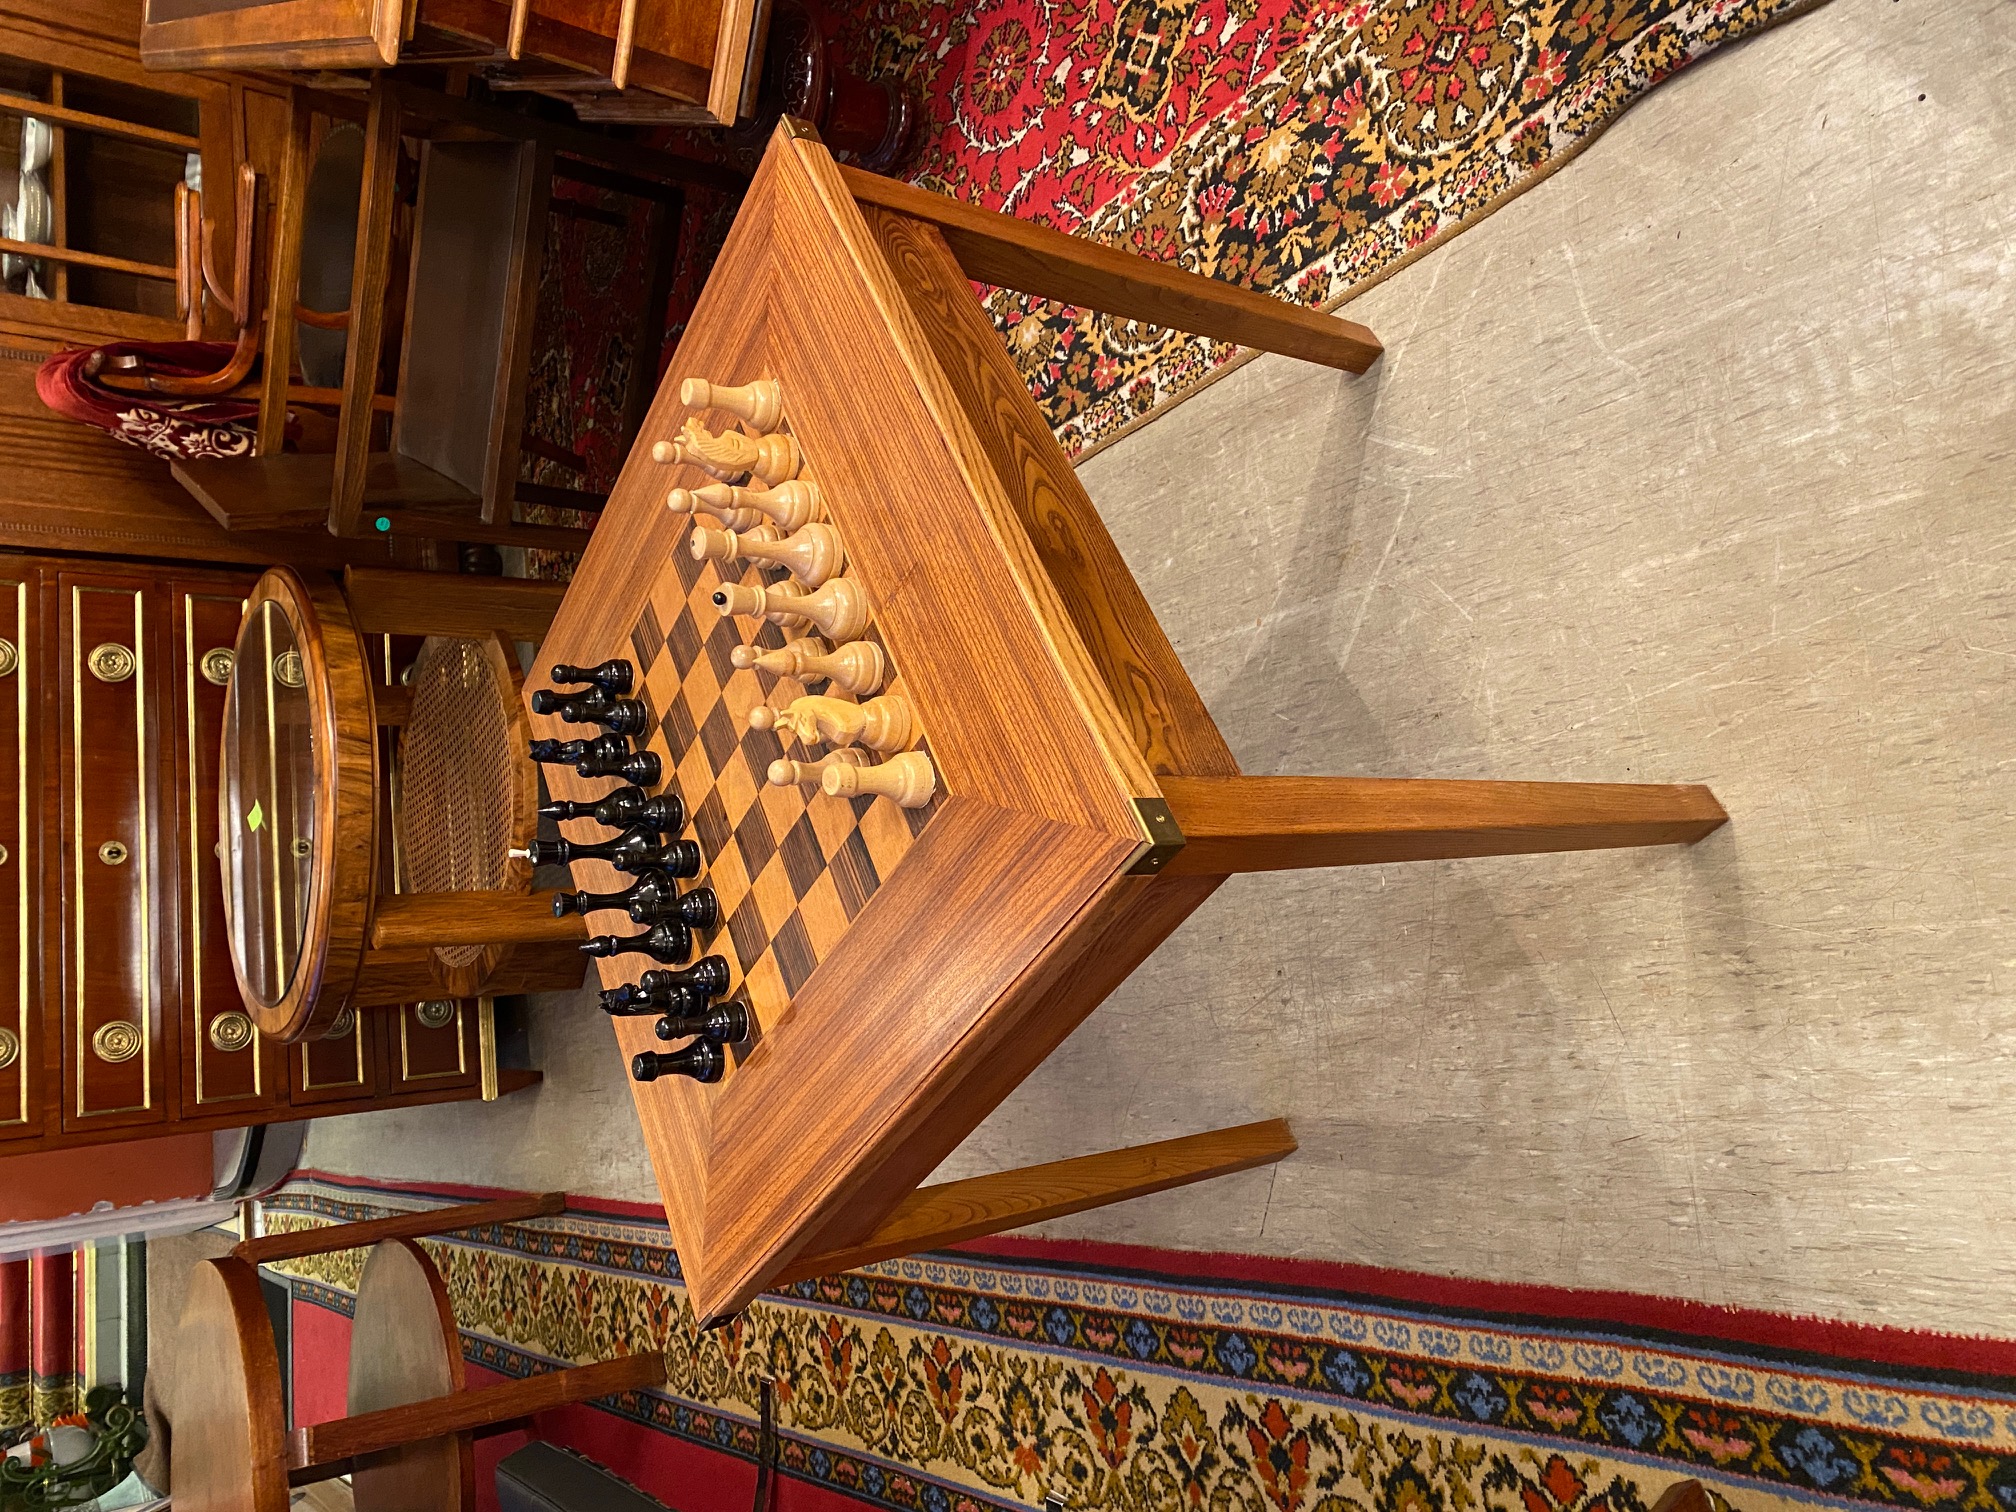 Antique chess table, wood inlay - Idla Antiik